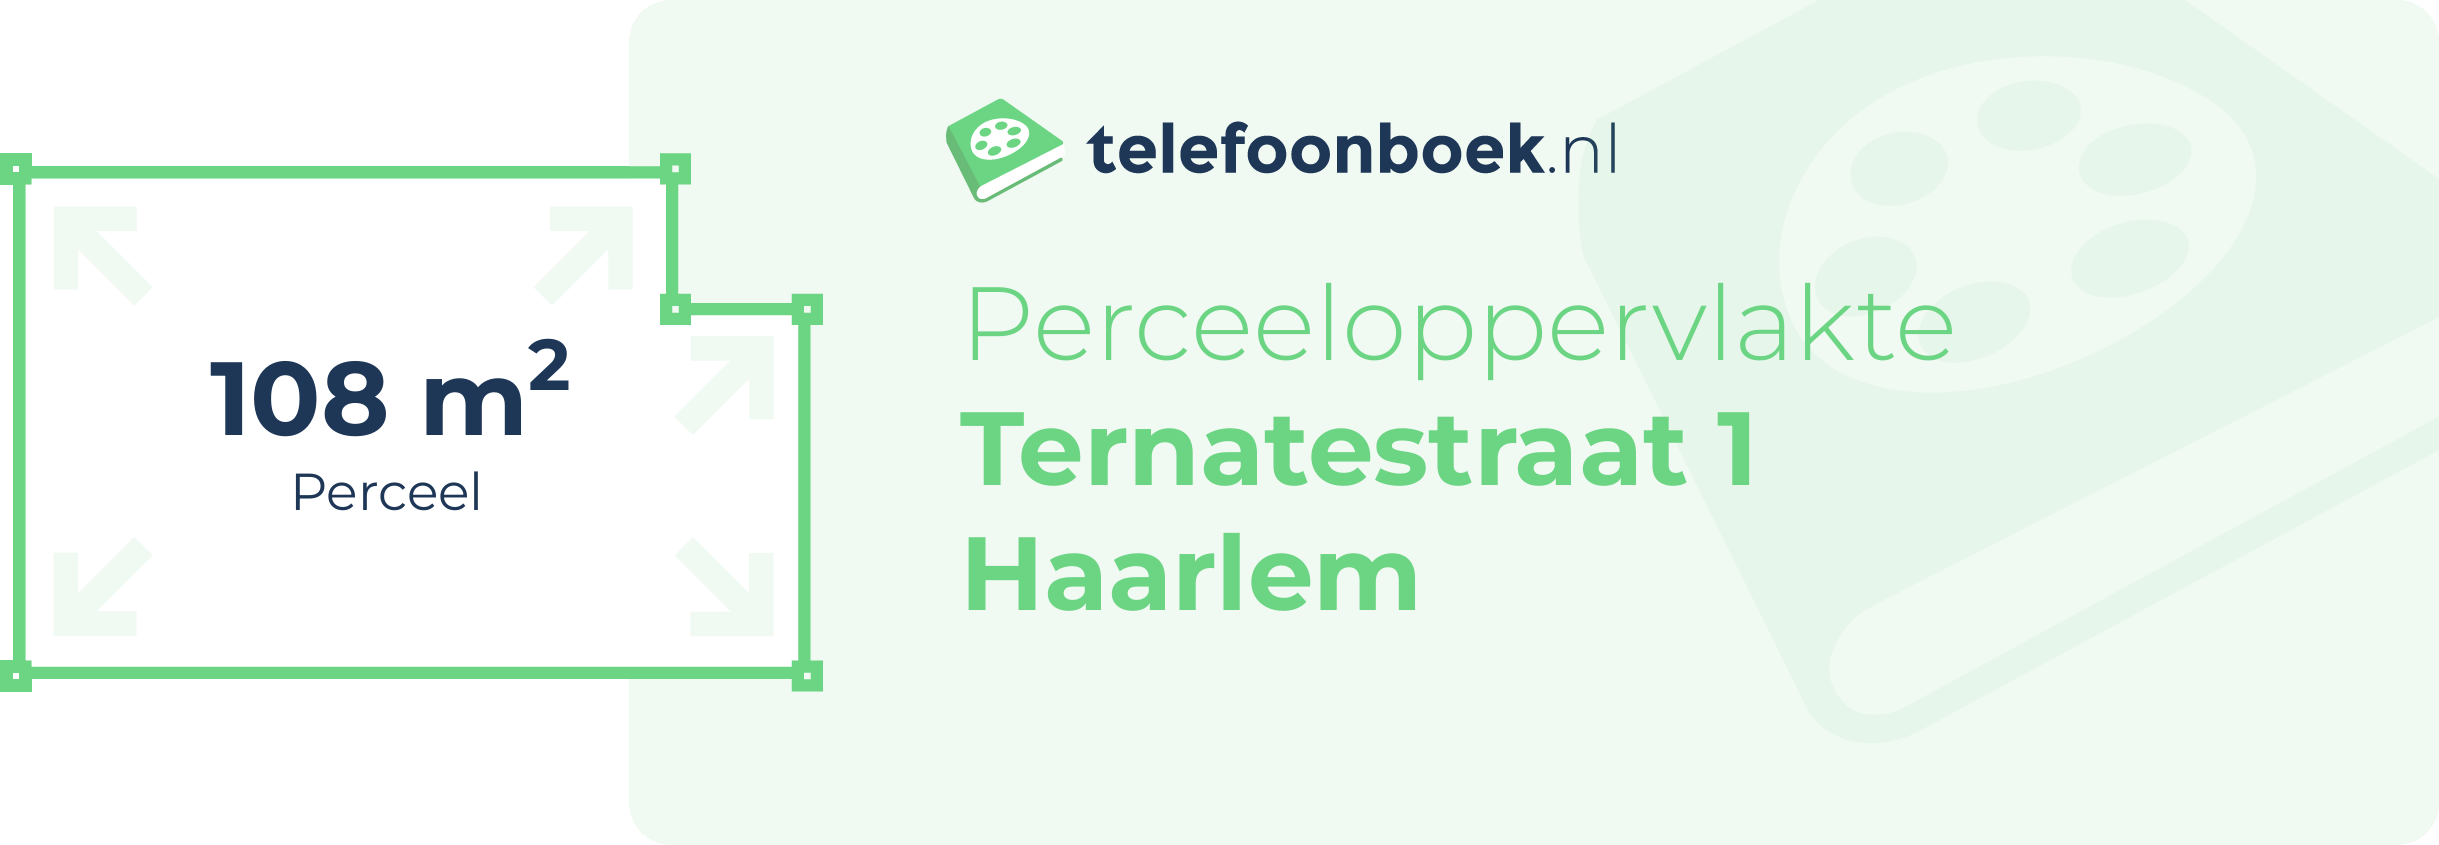 Perceeloppervlakte Ternatestraat 1 Haarlem